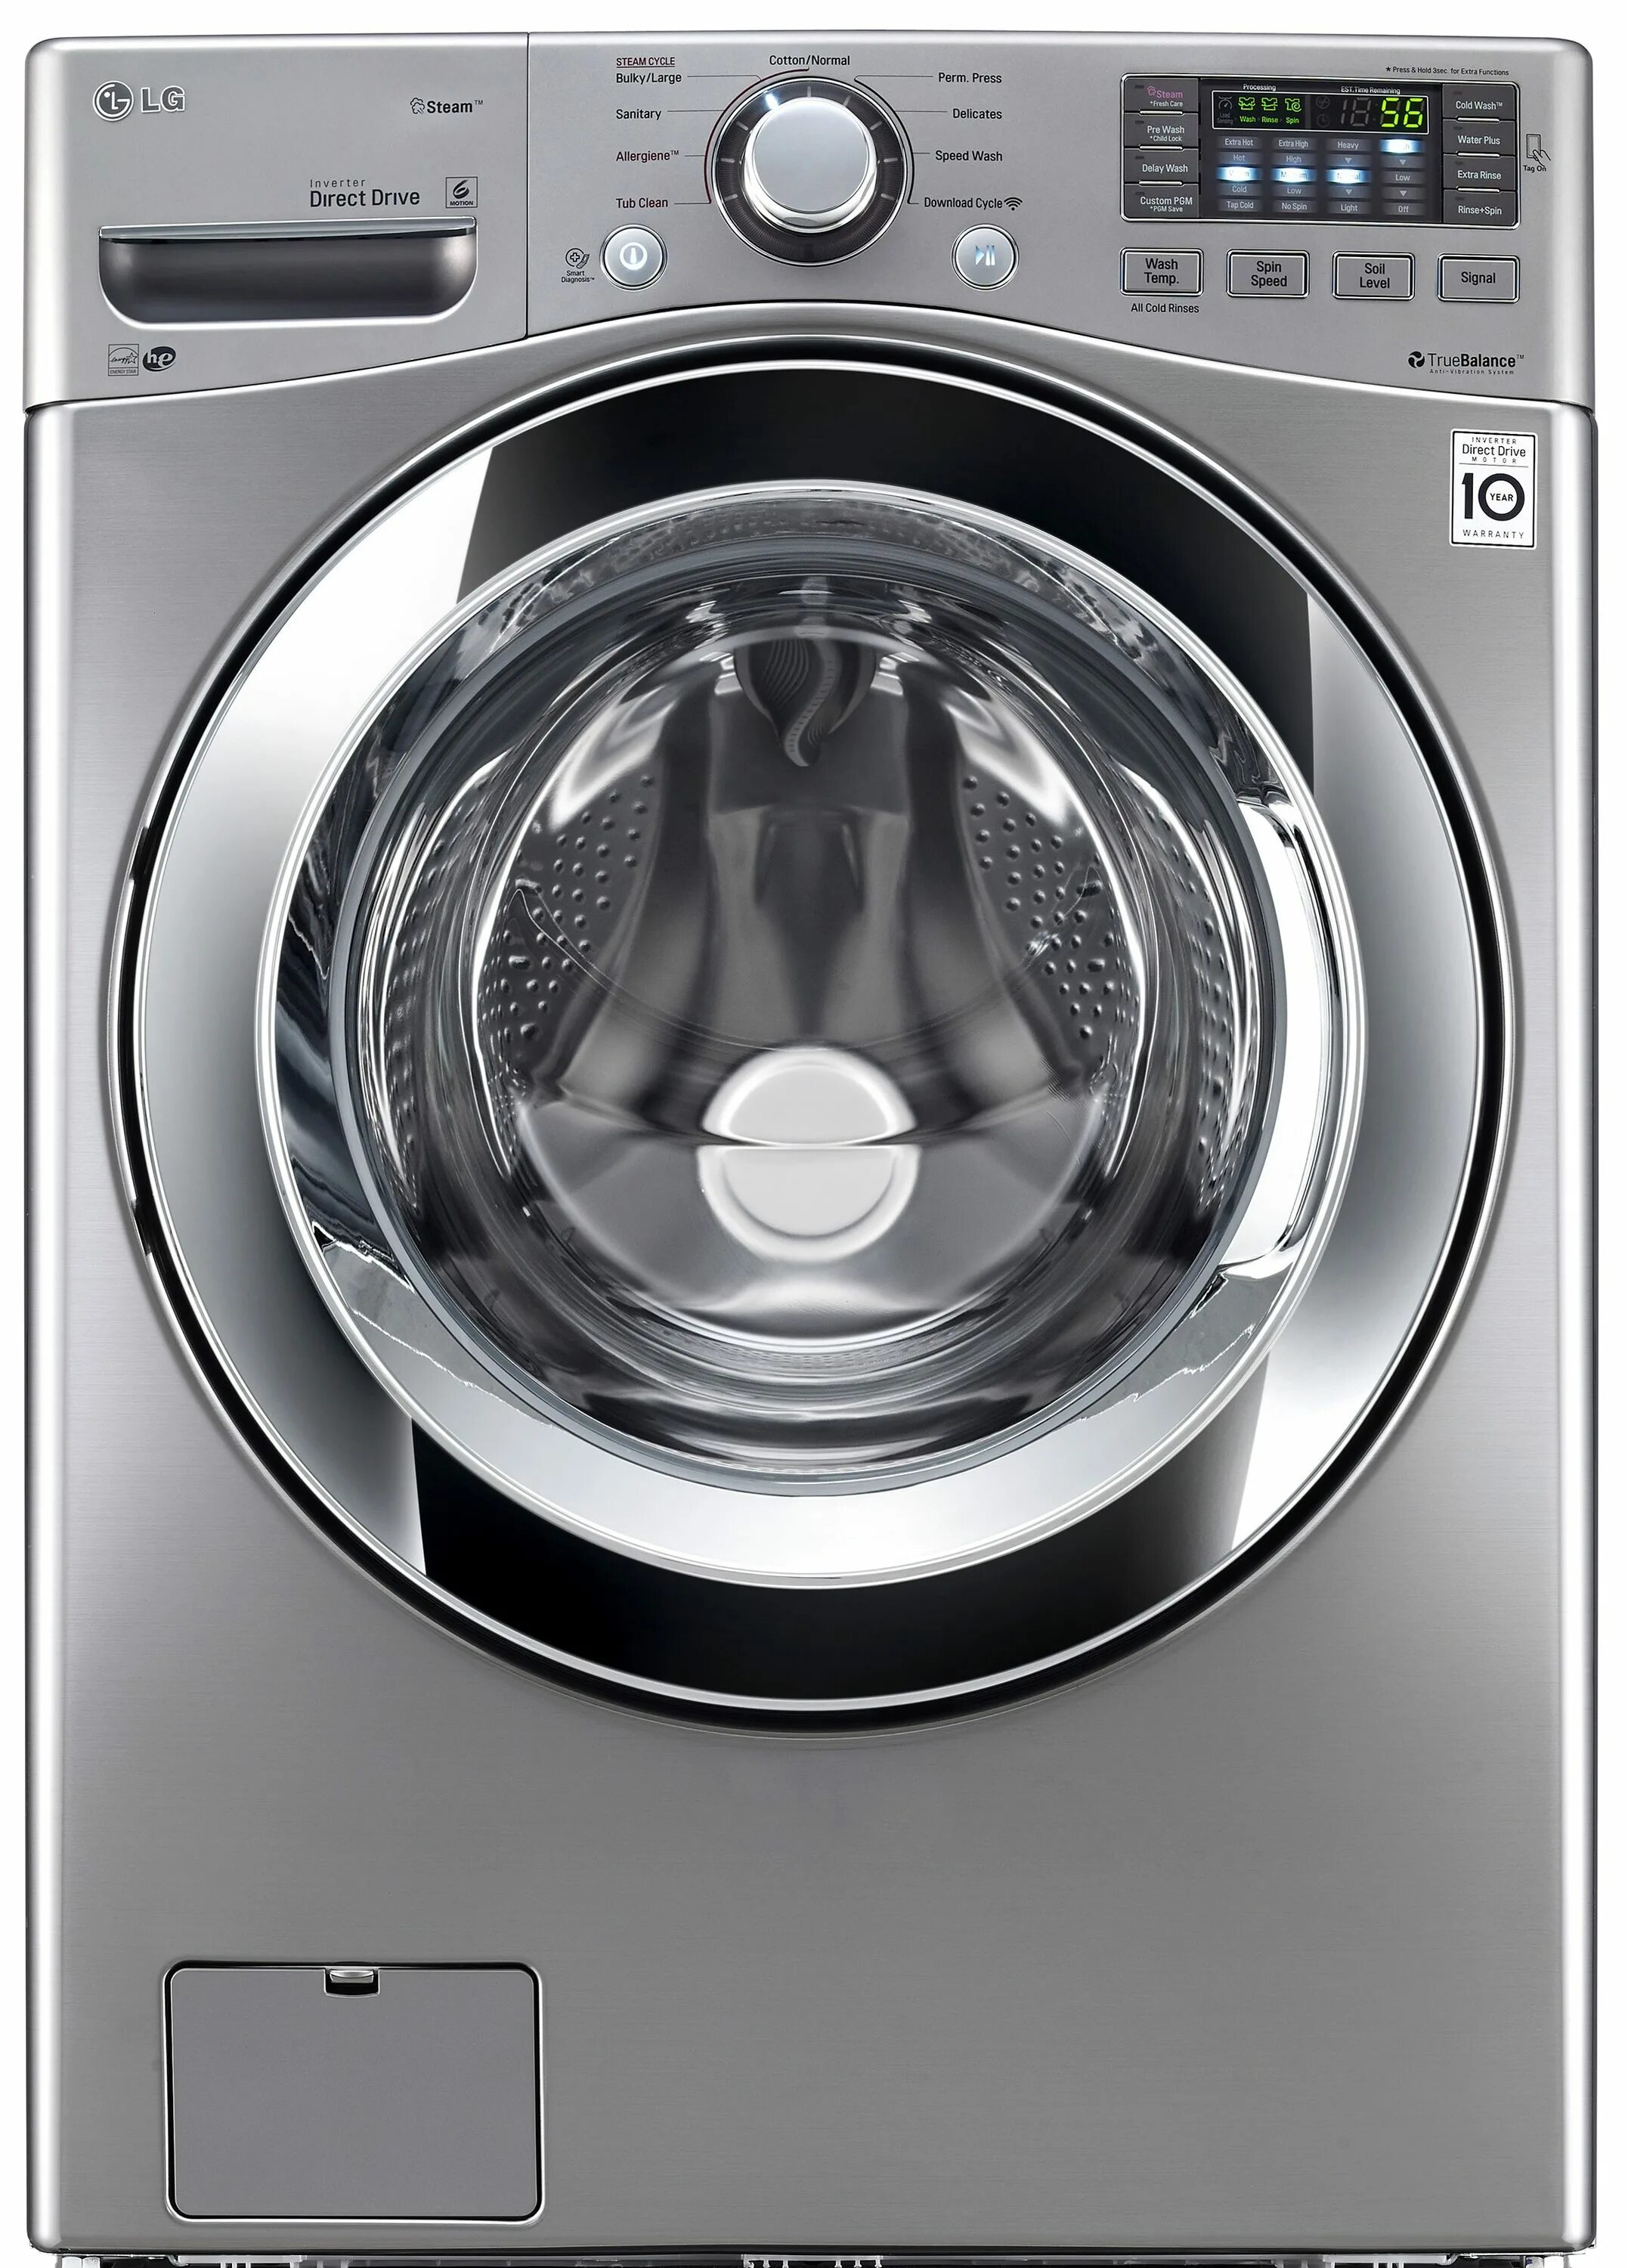 Купить машинки лж. Машинка LG 4nwd1800. Стиральная машина LG direct Drive 17/10 кг Washer Dryer. Стиральная машина LG FH-4a8tds4. Стиральная машина лж 7 кг.